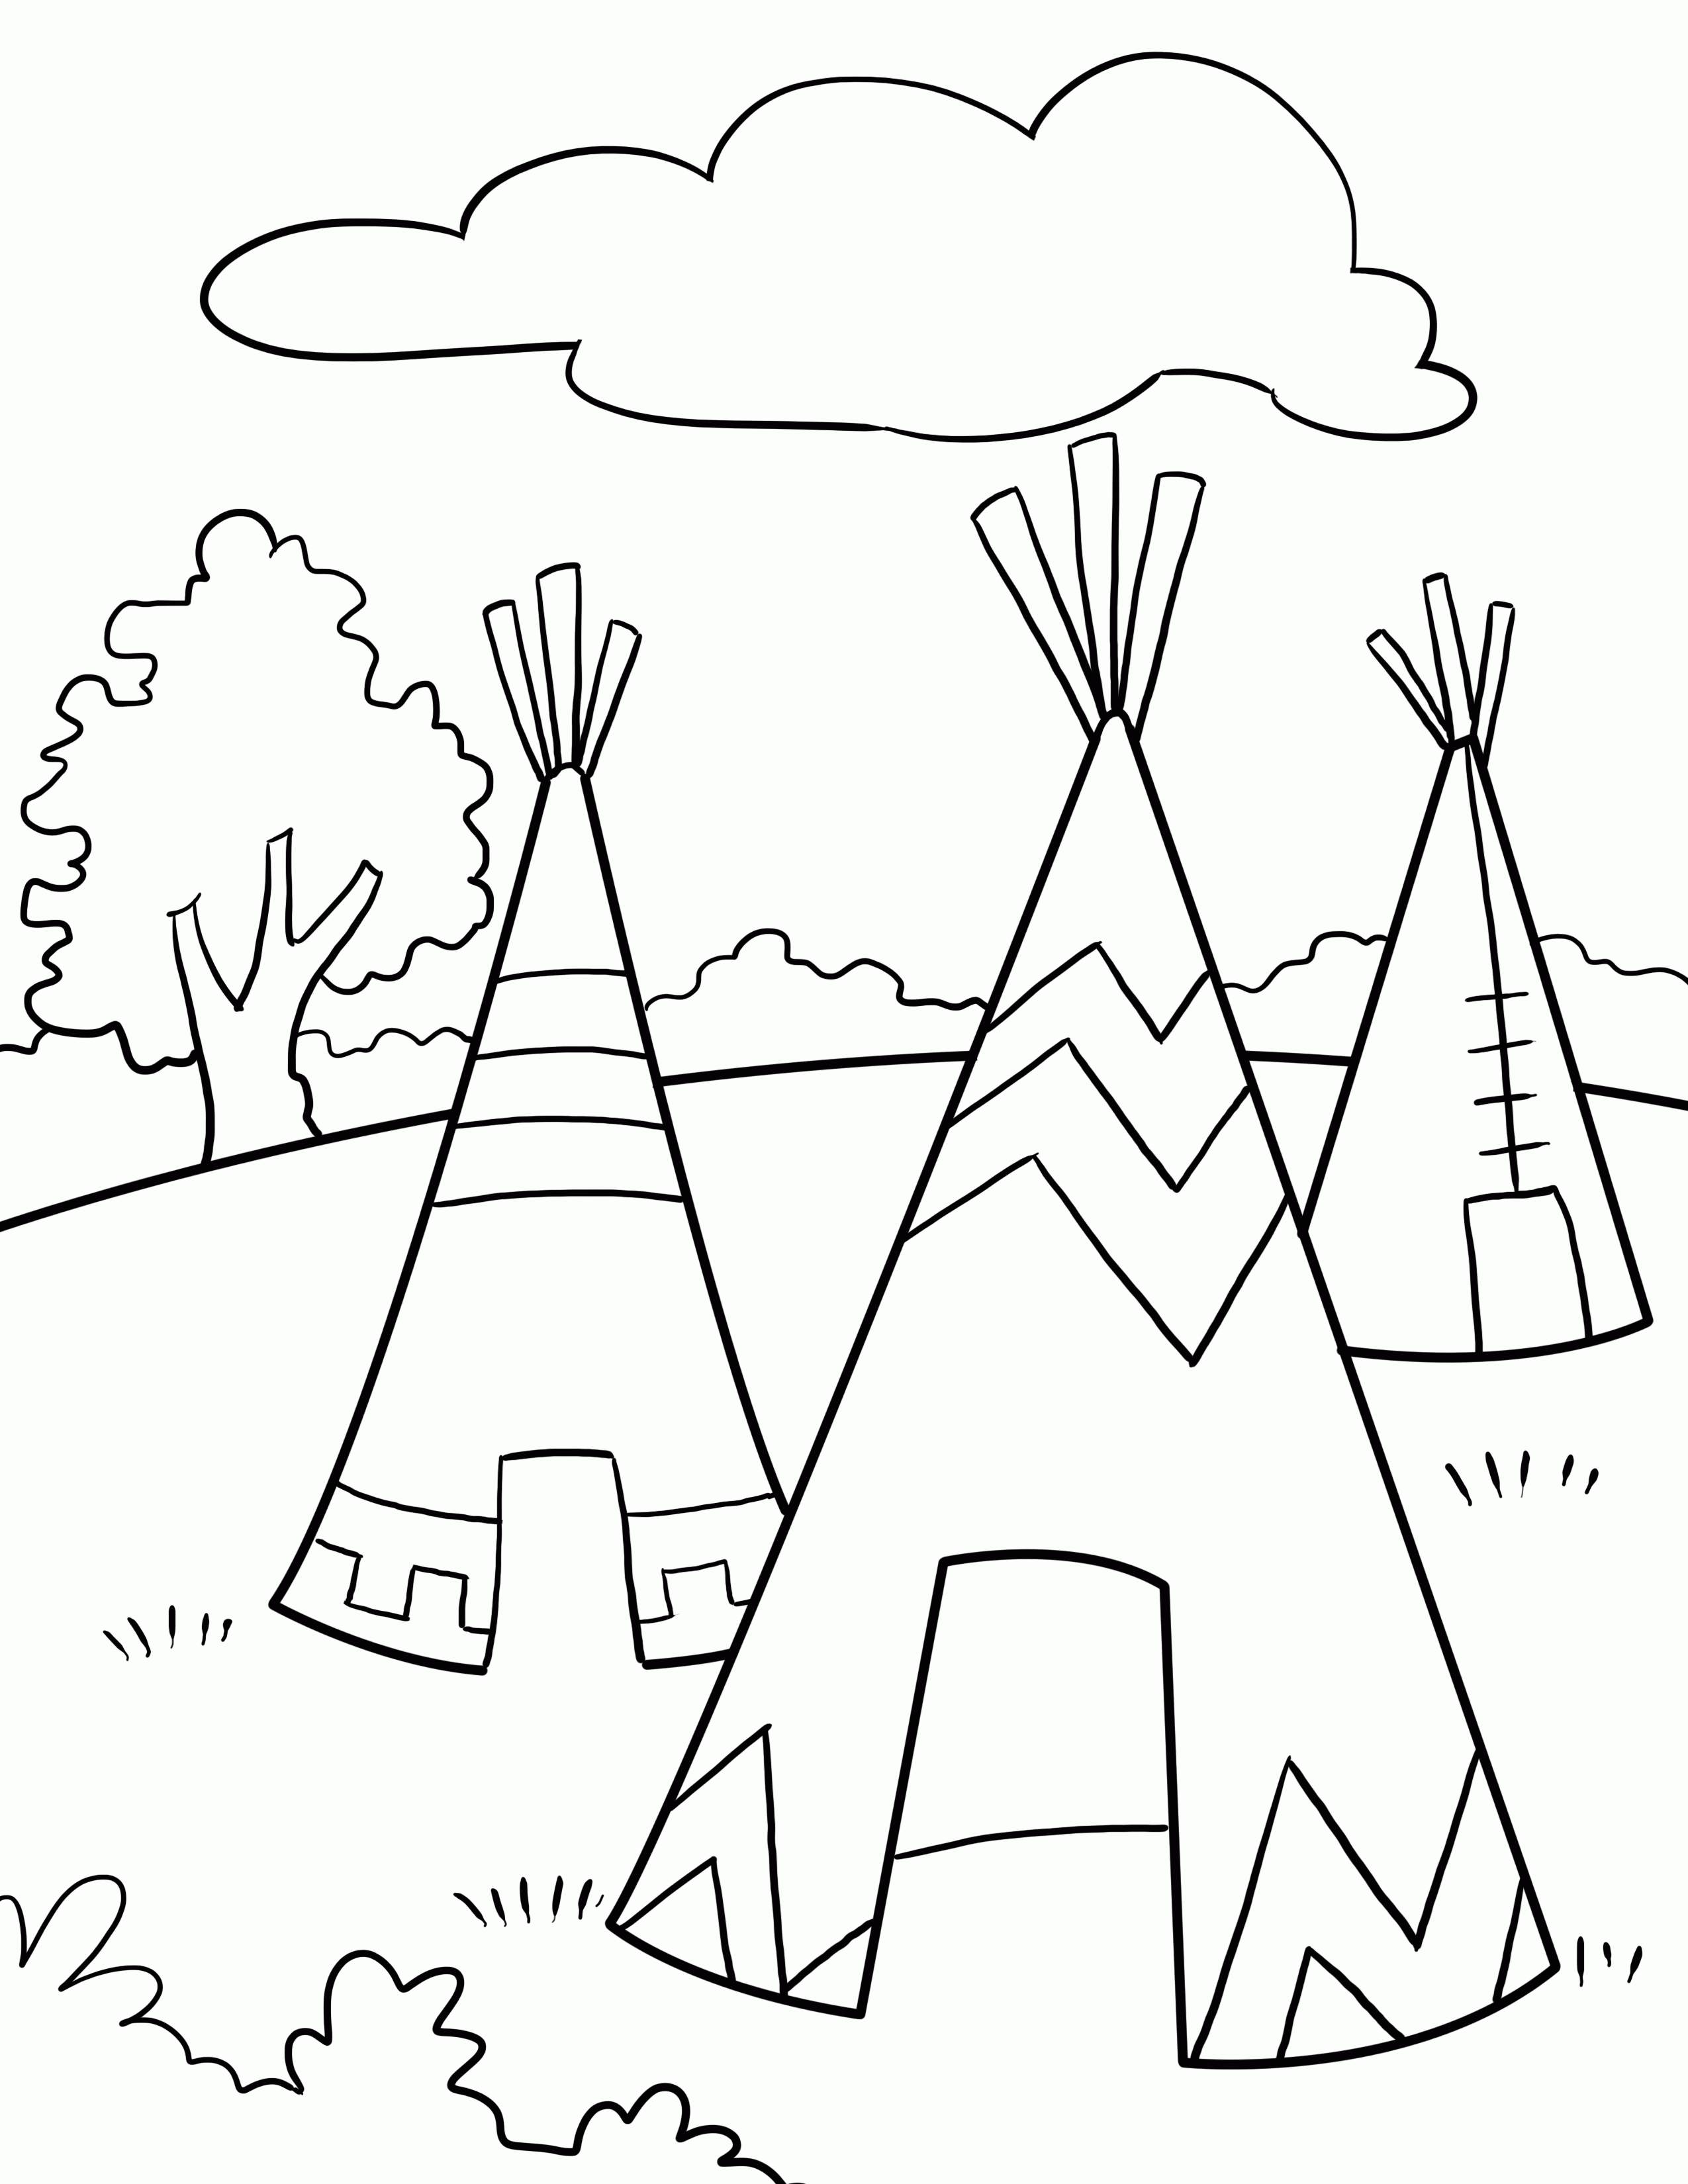 native american designs to color horse coloring pages free horses and native american designs to american native color 